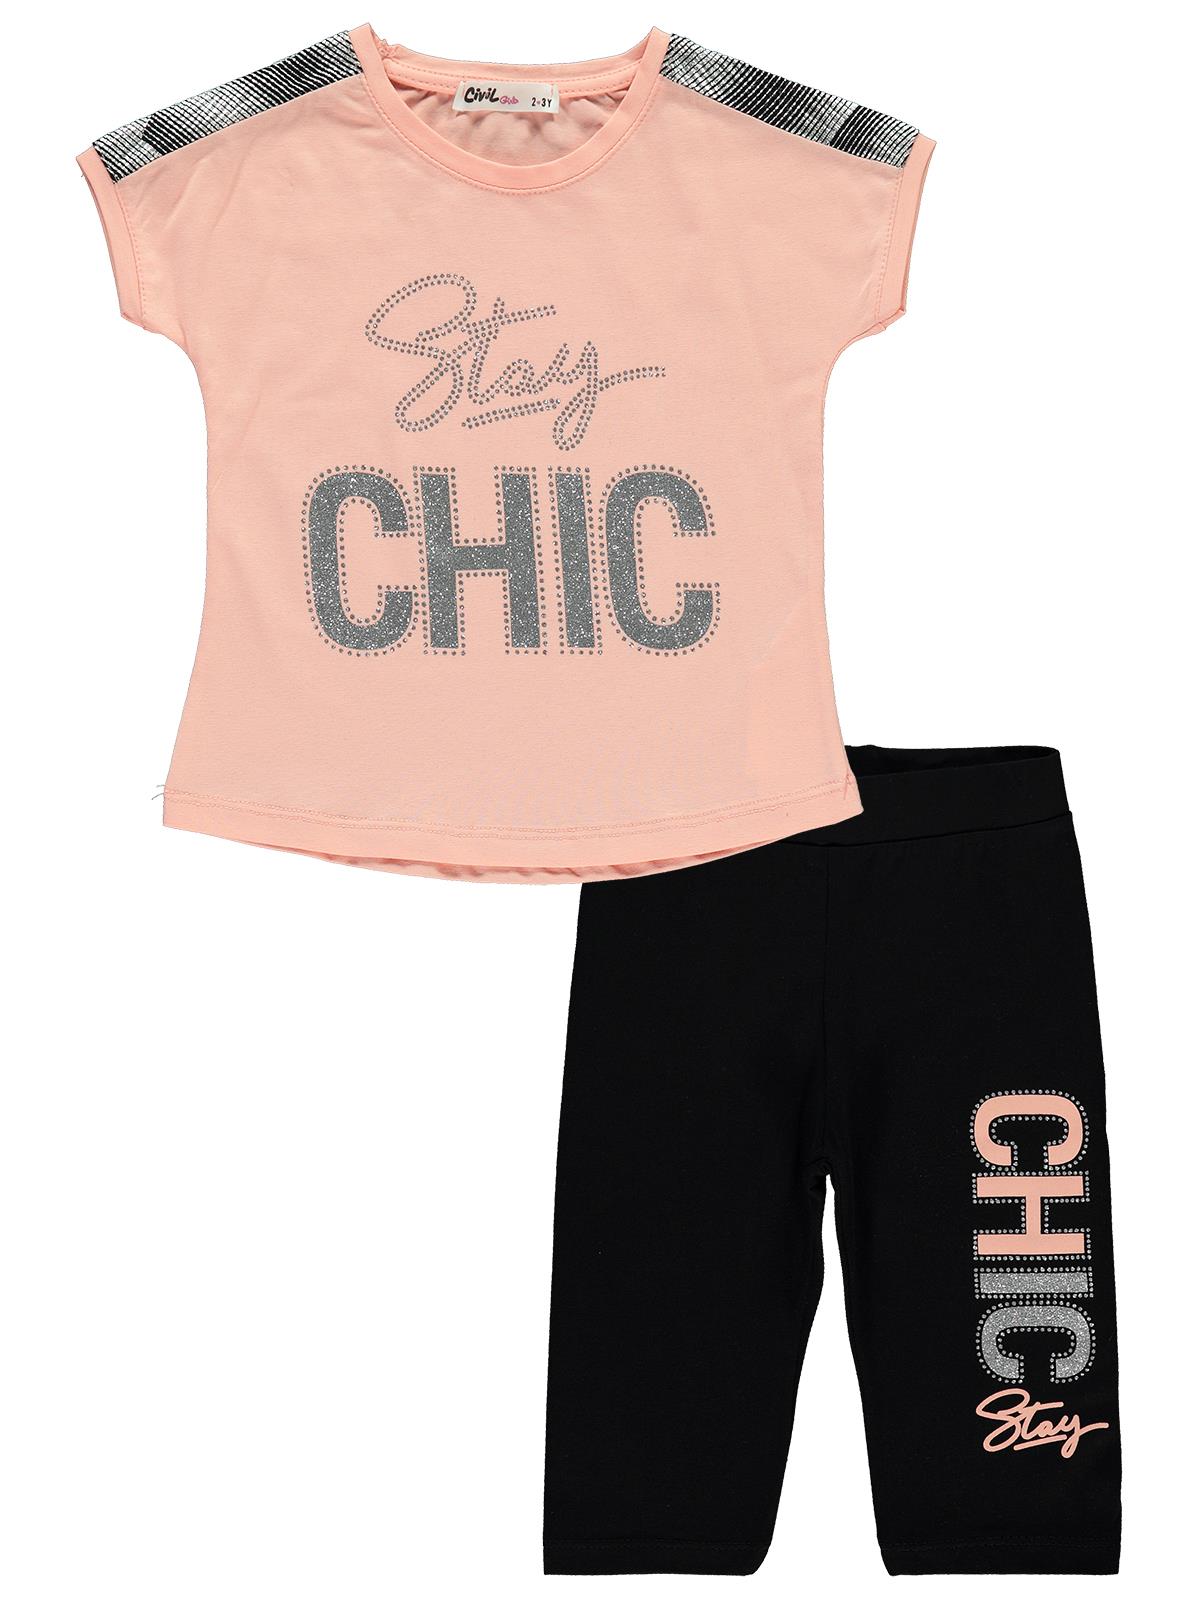 Civil Girls Pajama Suit #5893 With CHIC Print (S-22)